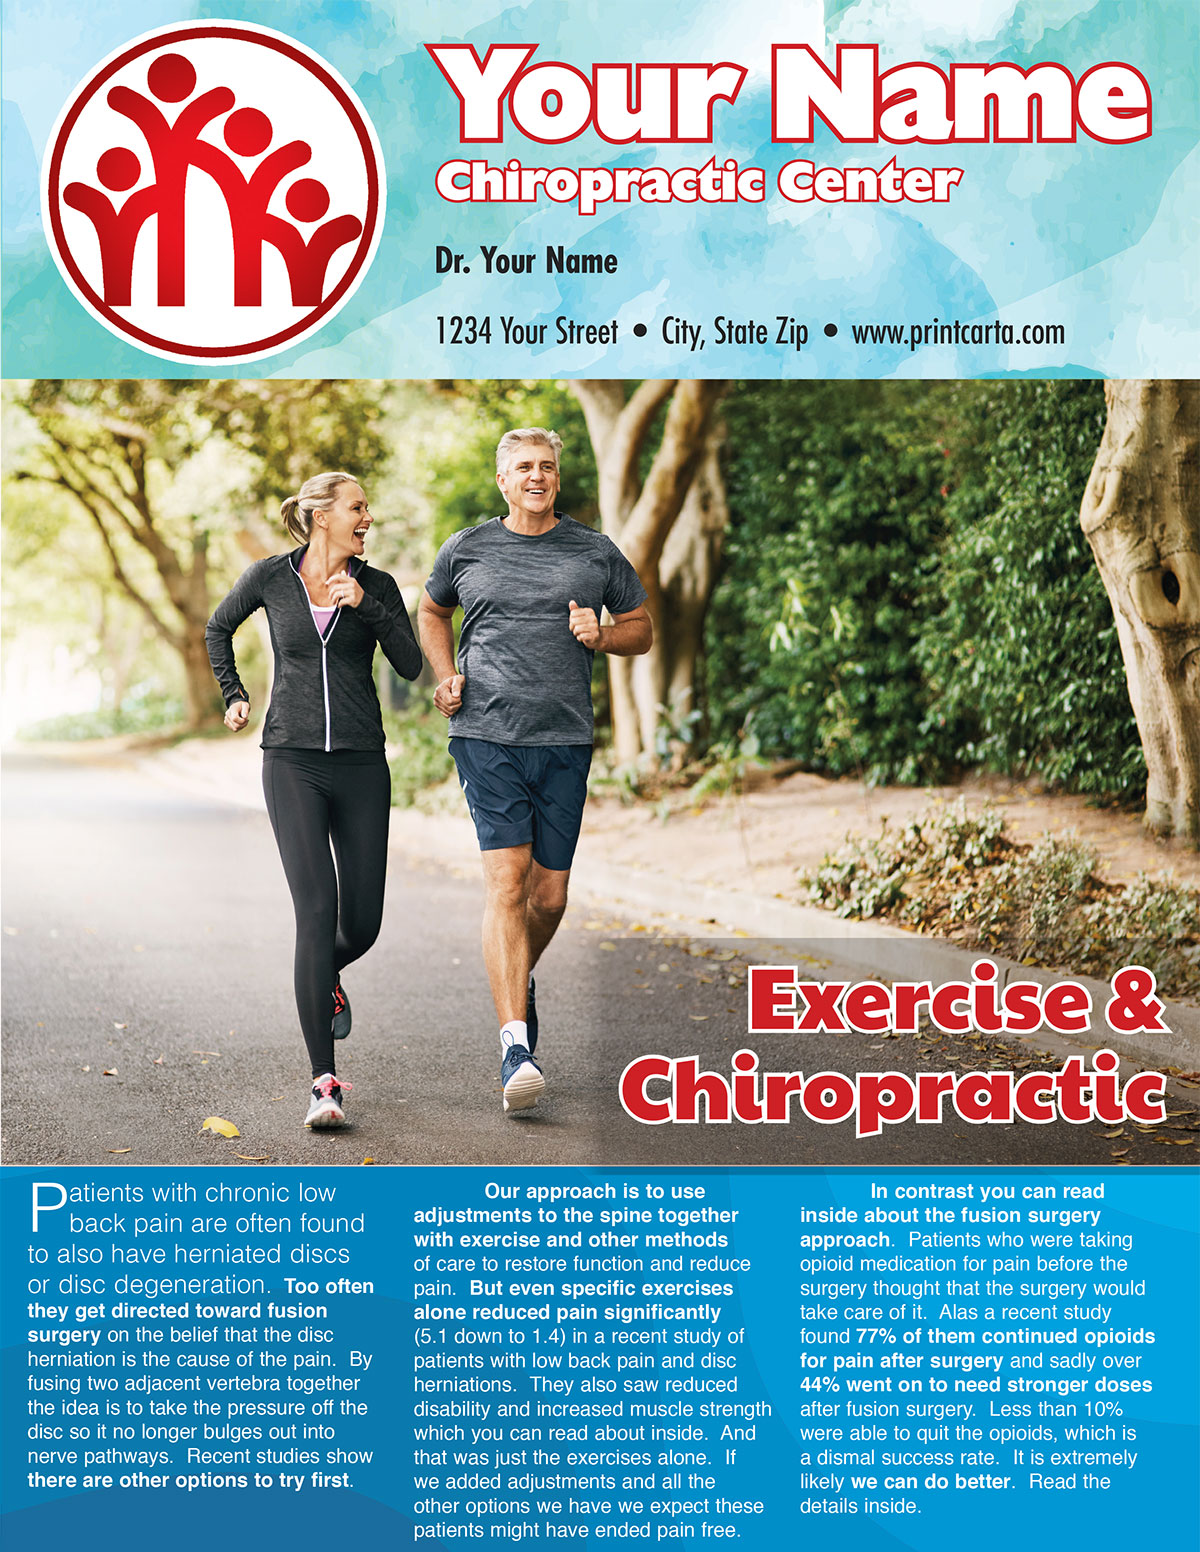 Exercise & Chiropractic